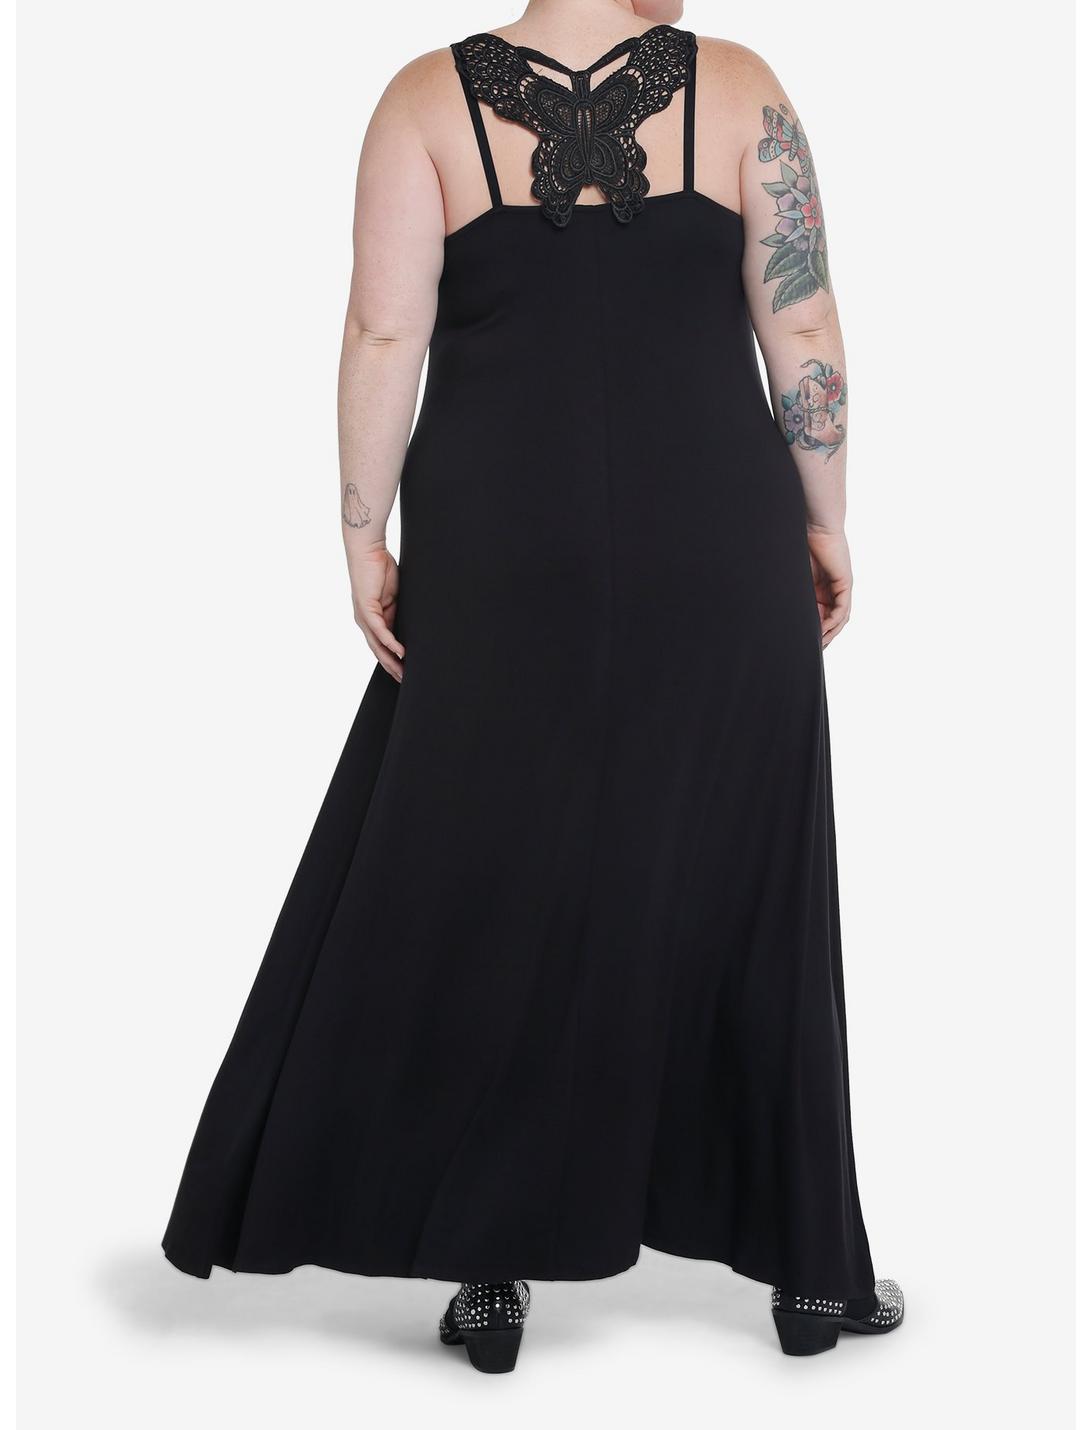 Thorn & Fable Black Lace Butterfly Maxi Dress Plus Size, BLACK, hi-res